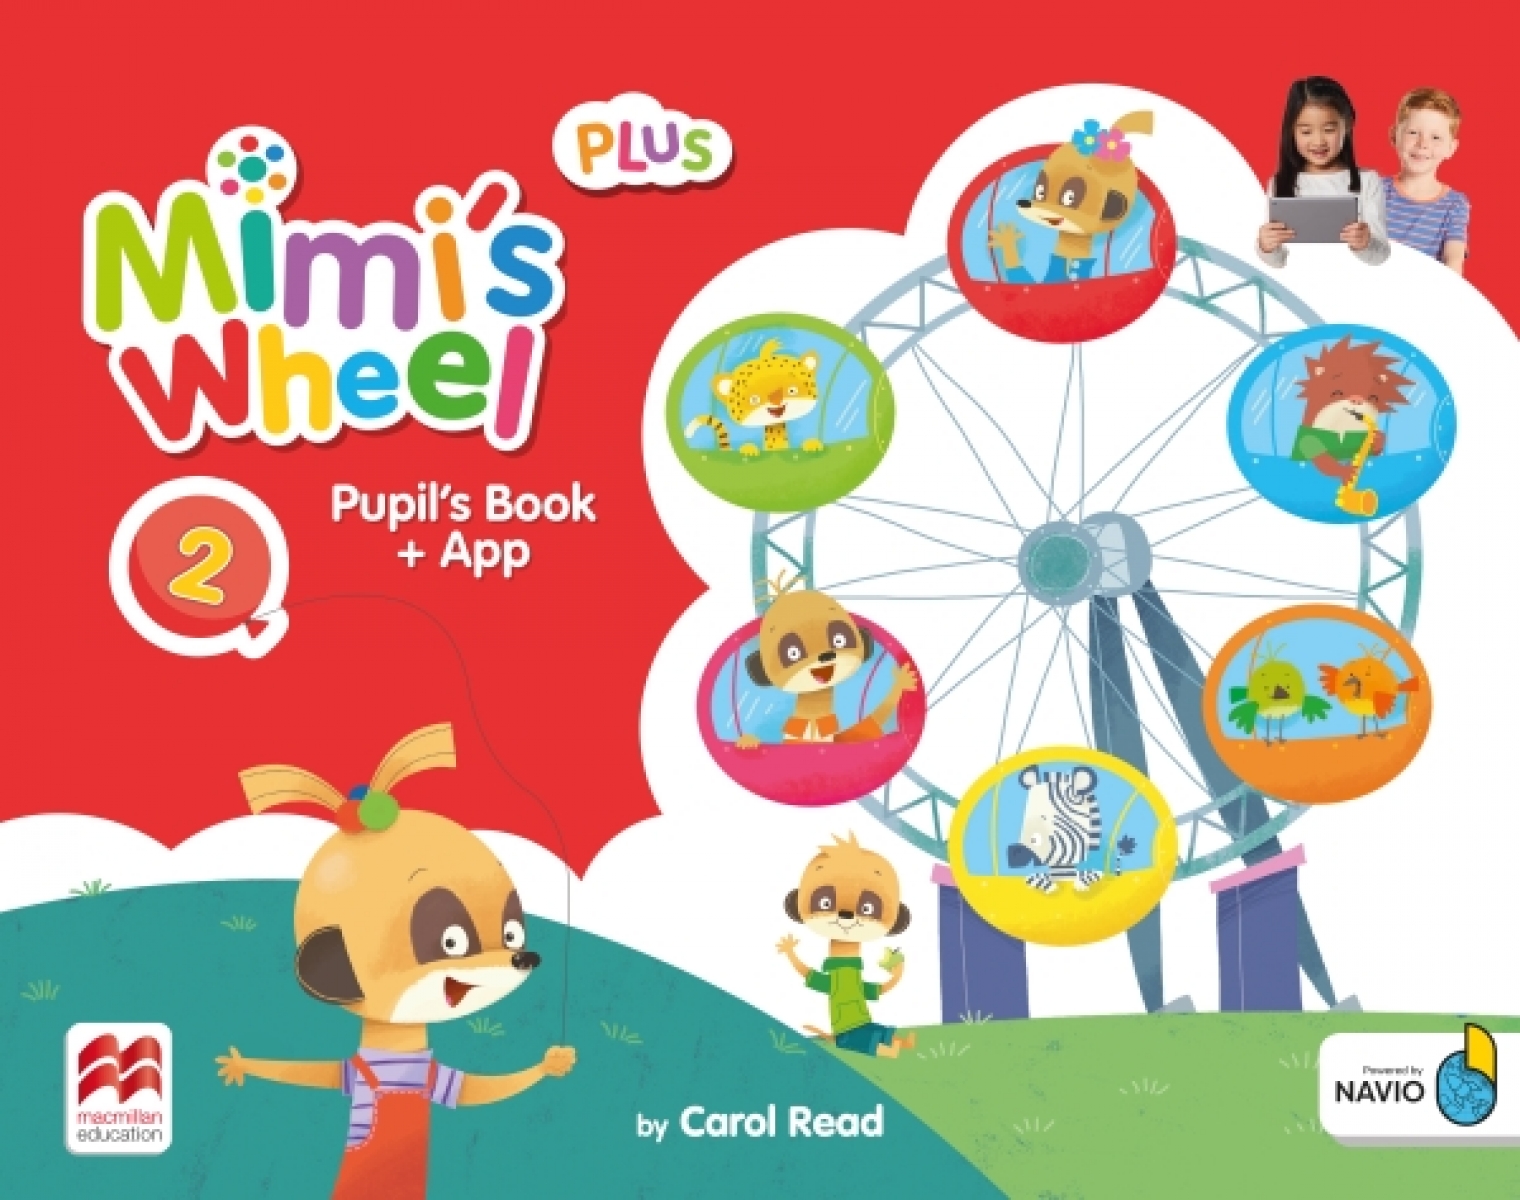 Read Carol Mimi's Wheel 2. Pupil's Book Plus with Navio App 